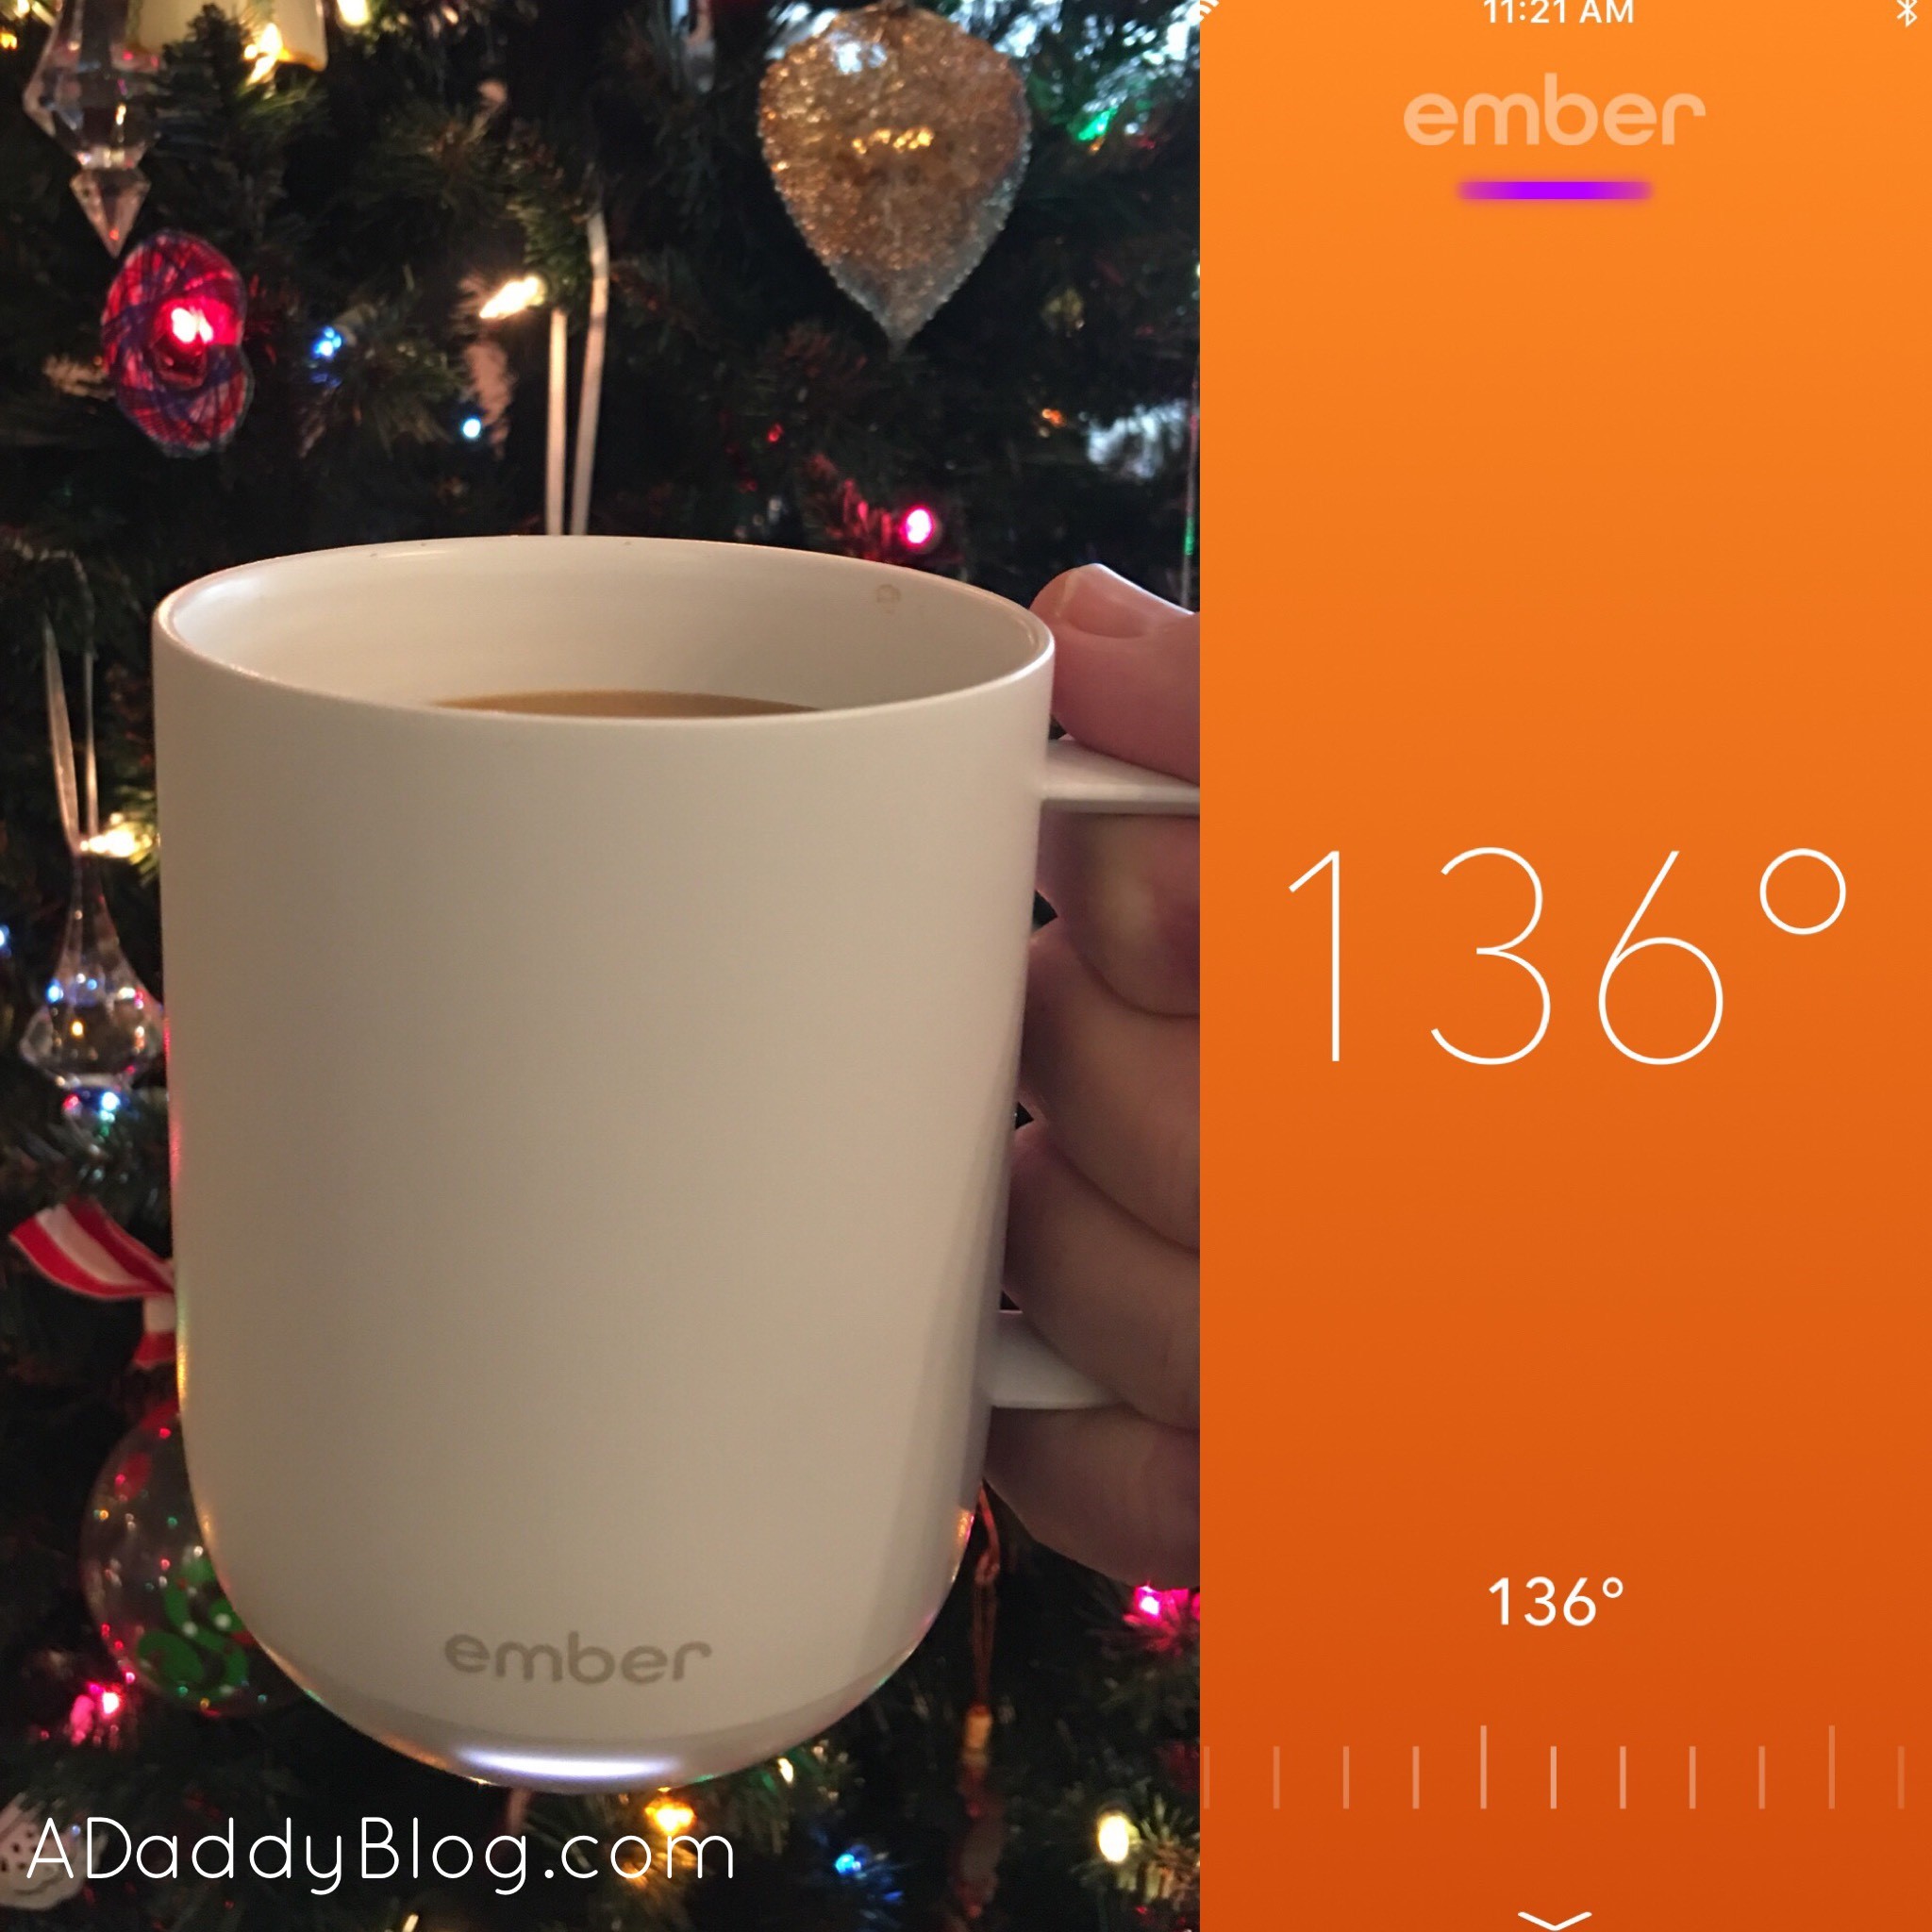 https://adaddyblog.com/wp-content/uploads/2018/01/Ember-Ceramic-Temperature-Controlled-Mug-for-Coffee-Tea-2.jpg